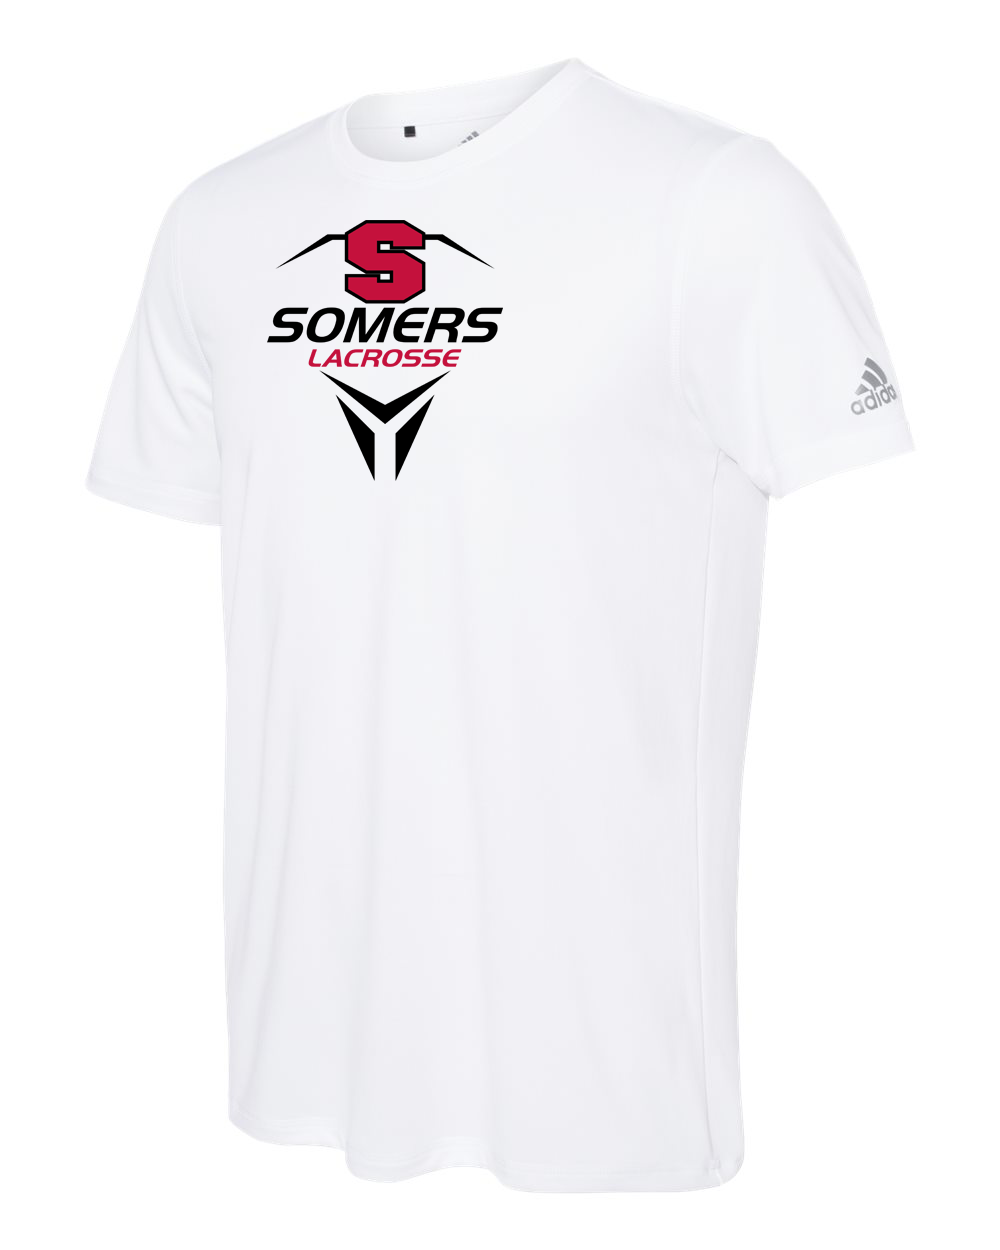 Somers Girls Lacrosse Adidas Sport T-Shirt